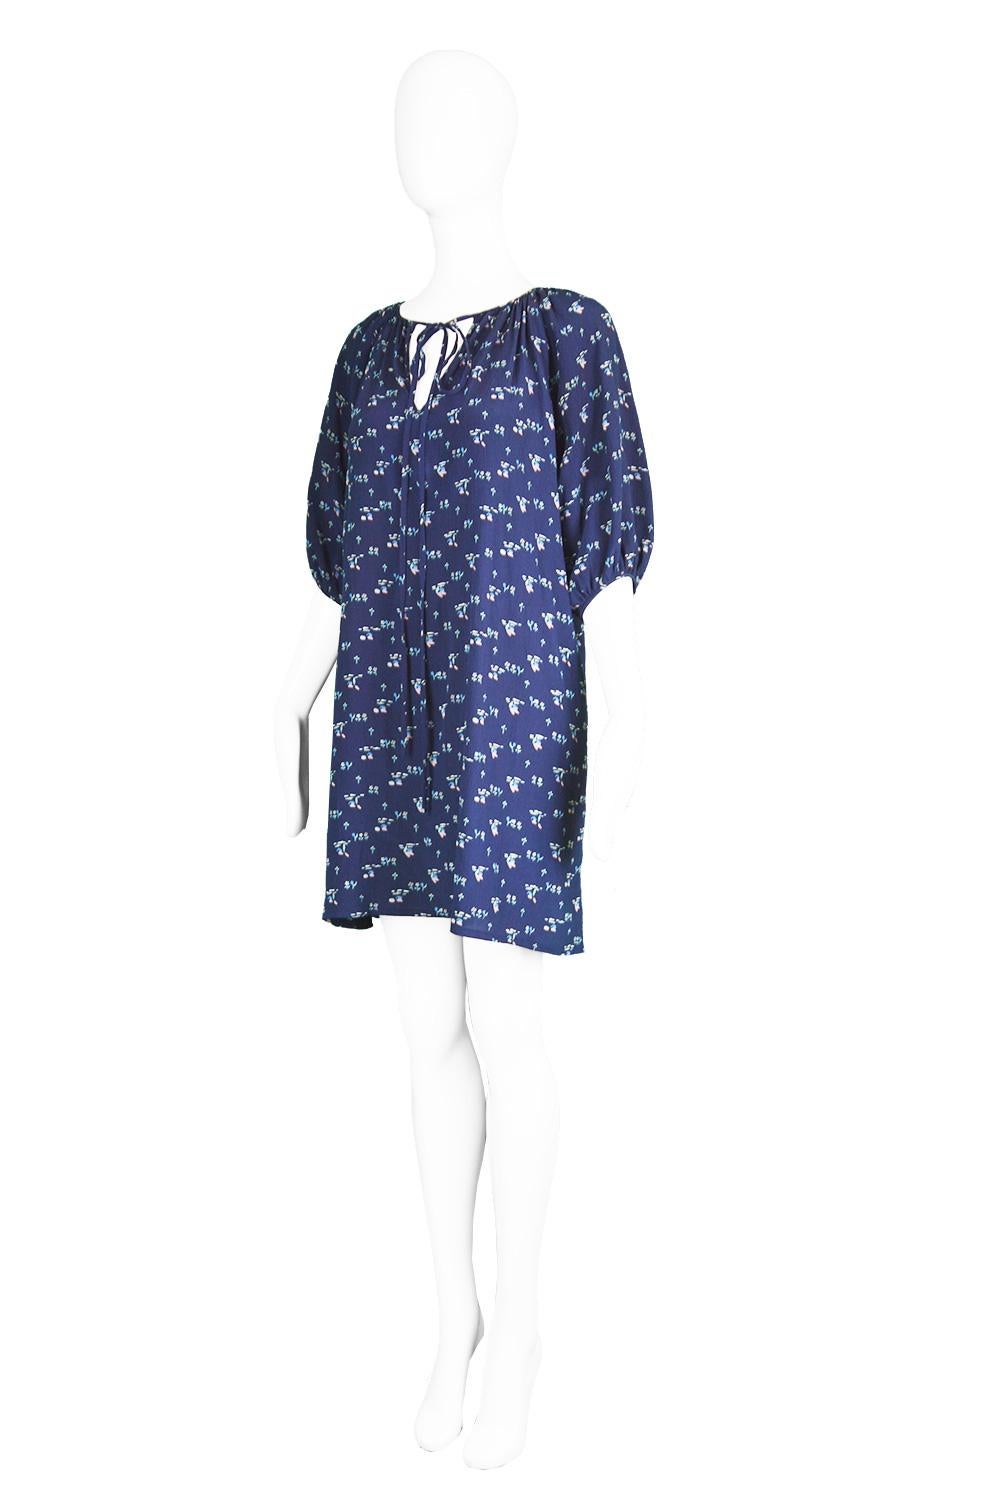 Chloé by Karl Lagerfeld Vintage Dark Blue Crinkled Silk Floral Mini Dress, 1970s 1